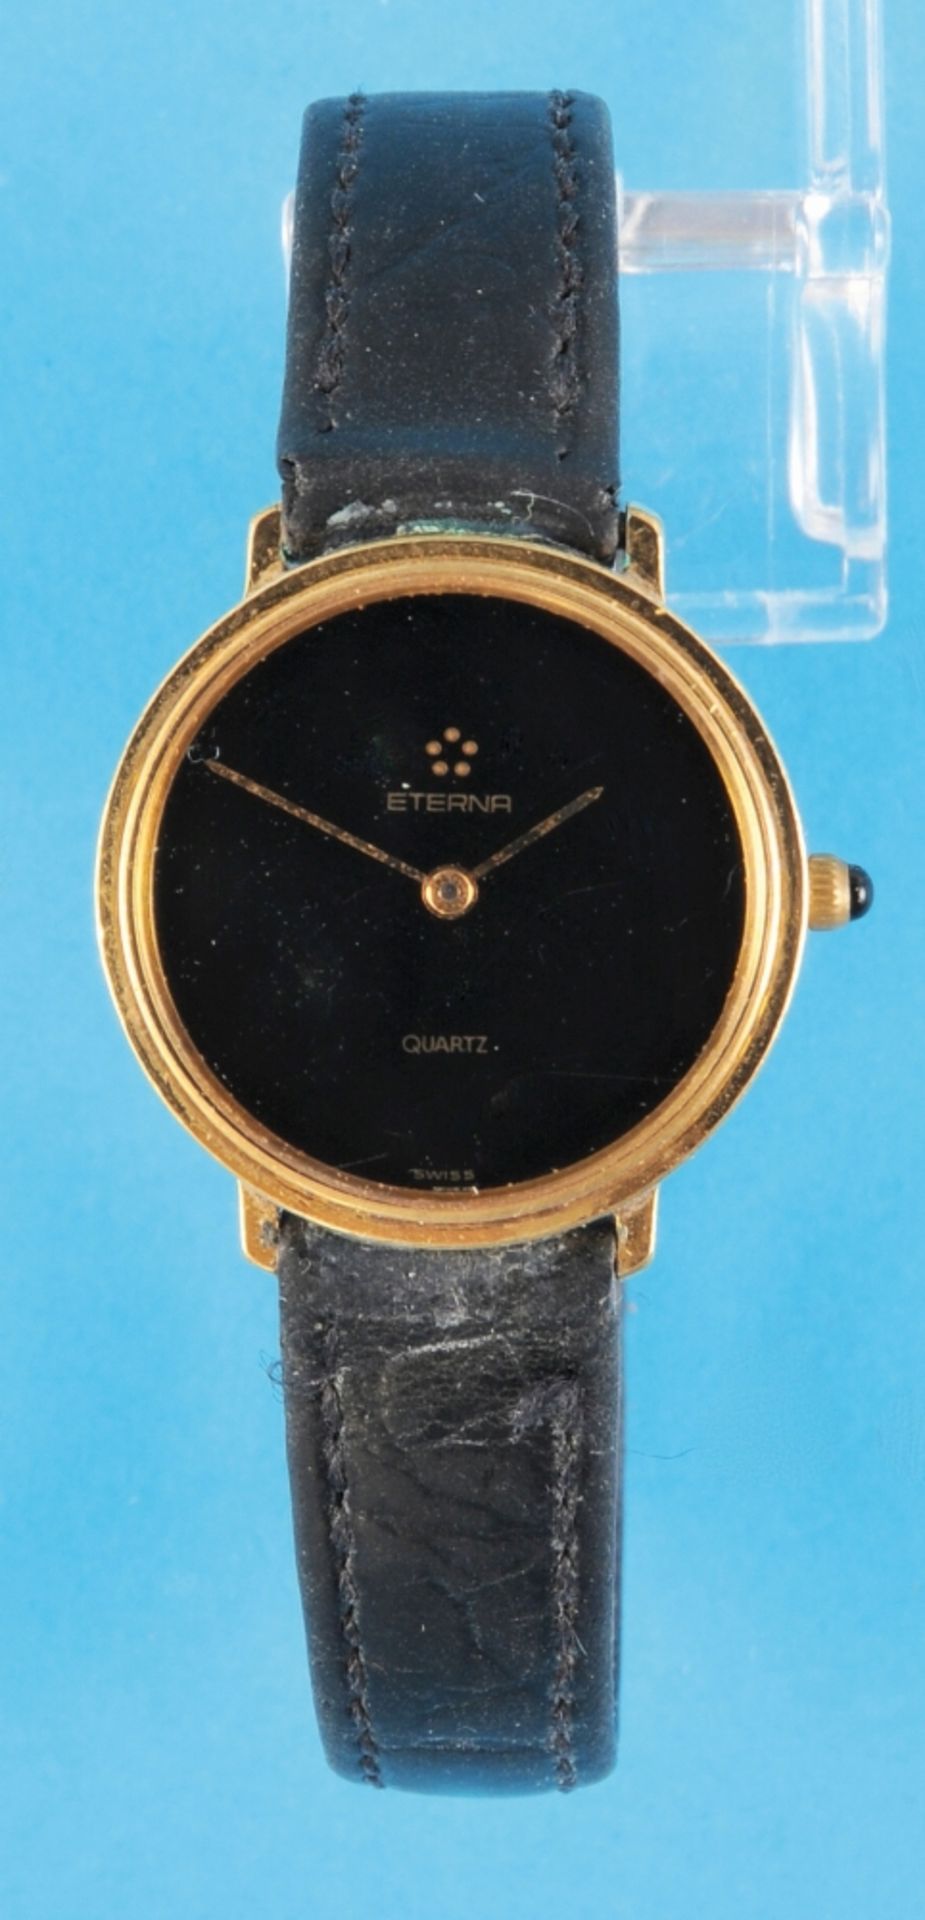 Eterna Quartz ladies wristwatch, with instruction manual from 1981,